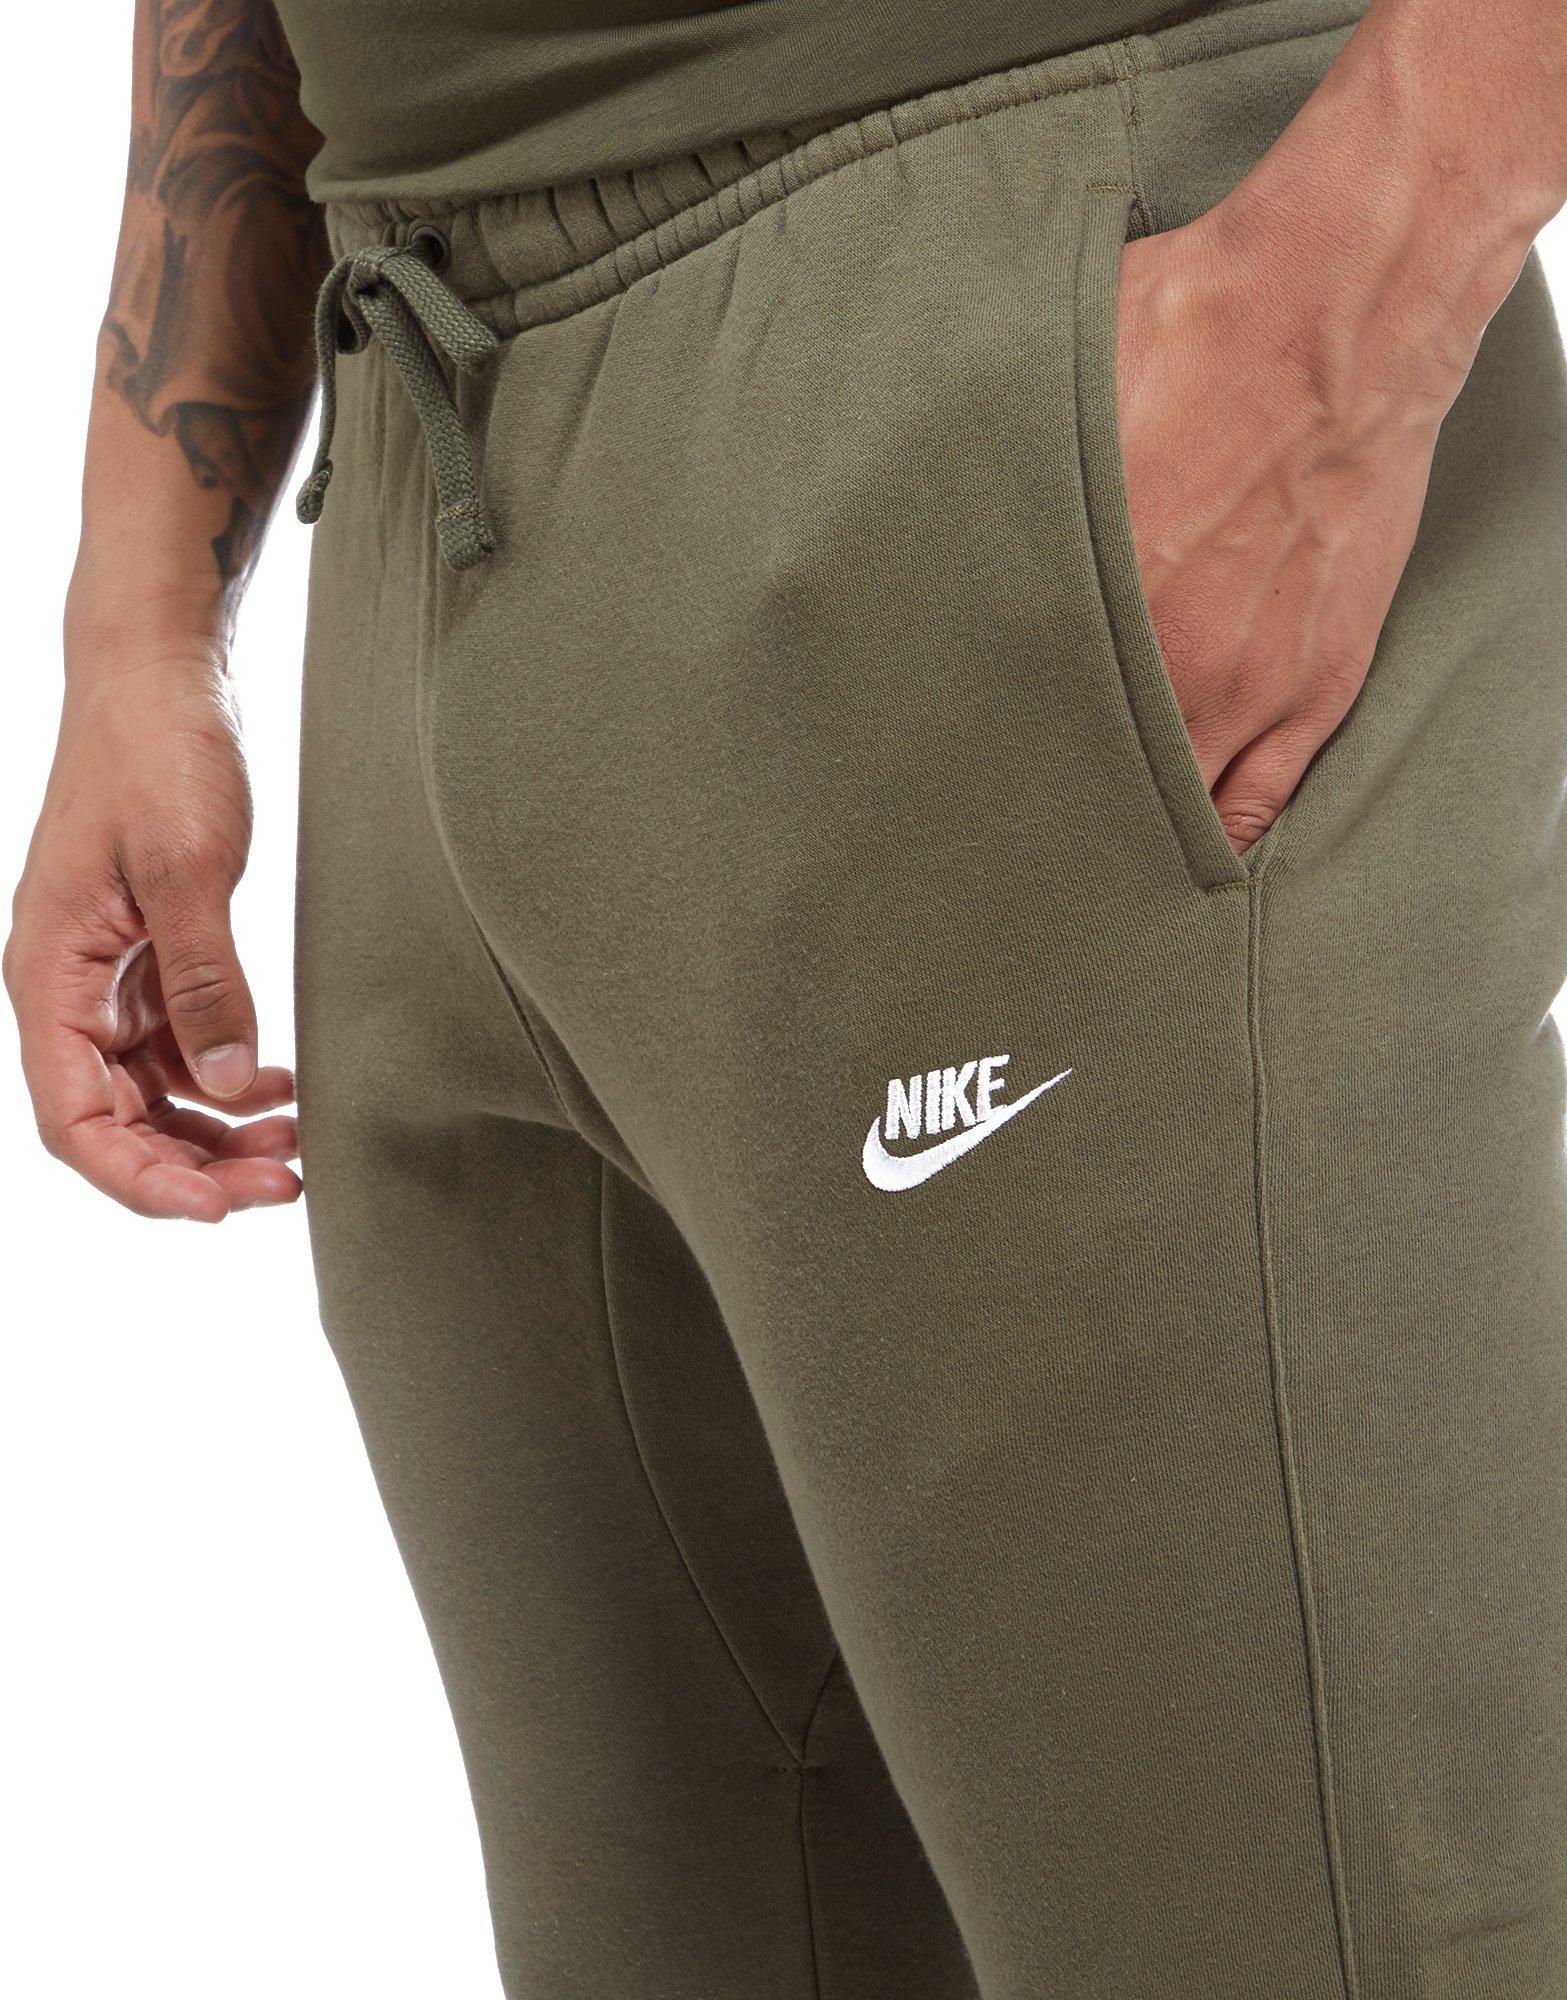 Nike Foundaton Dc Fleece Pants in Olive (Green) for Men - Lyst